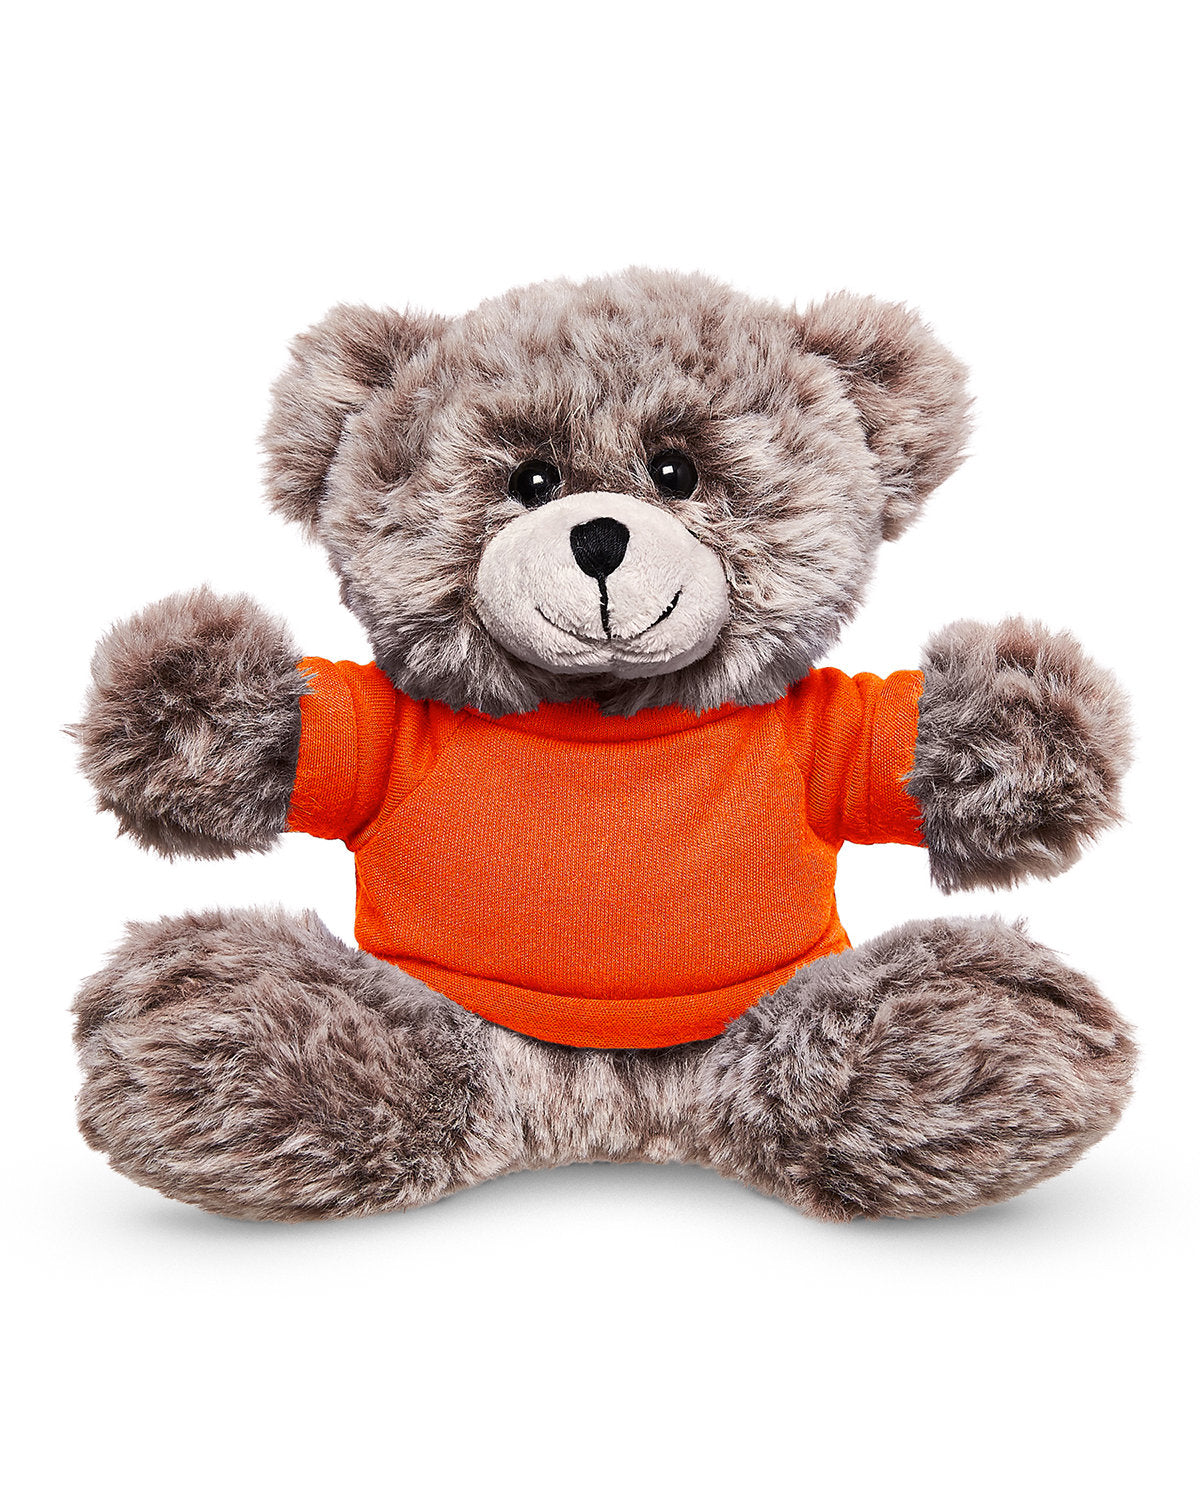 7" Soft Plush Bear With T-Shirt